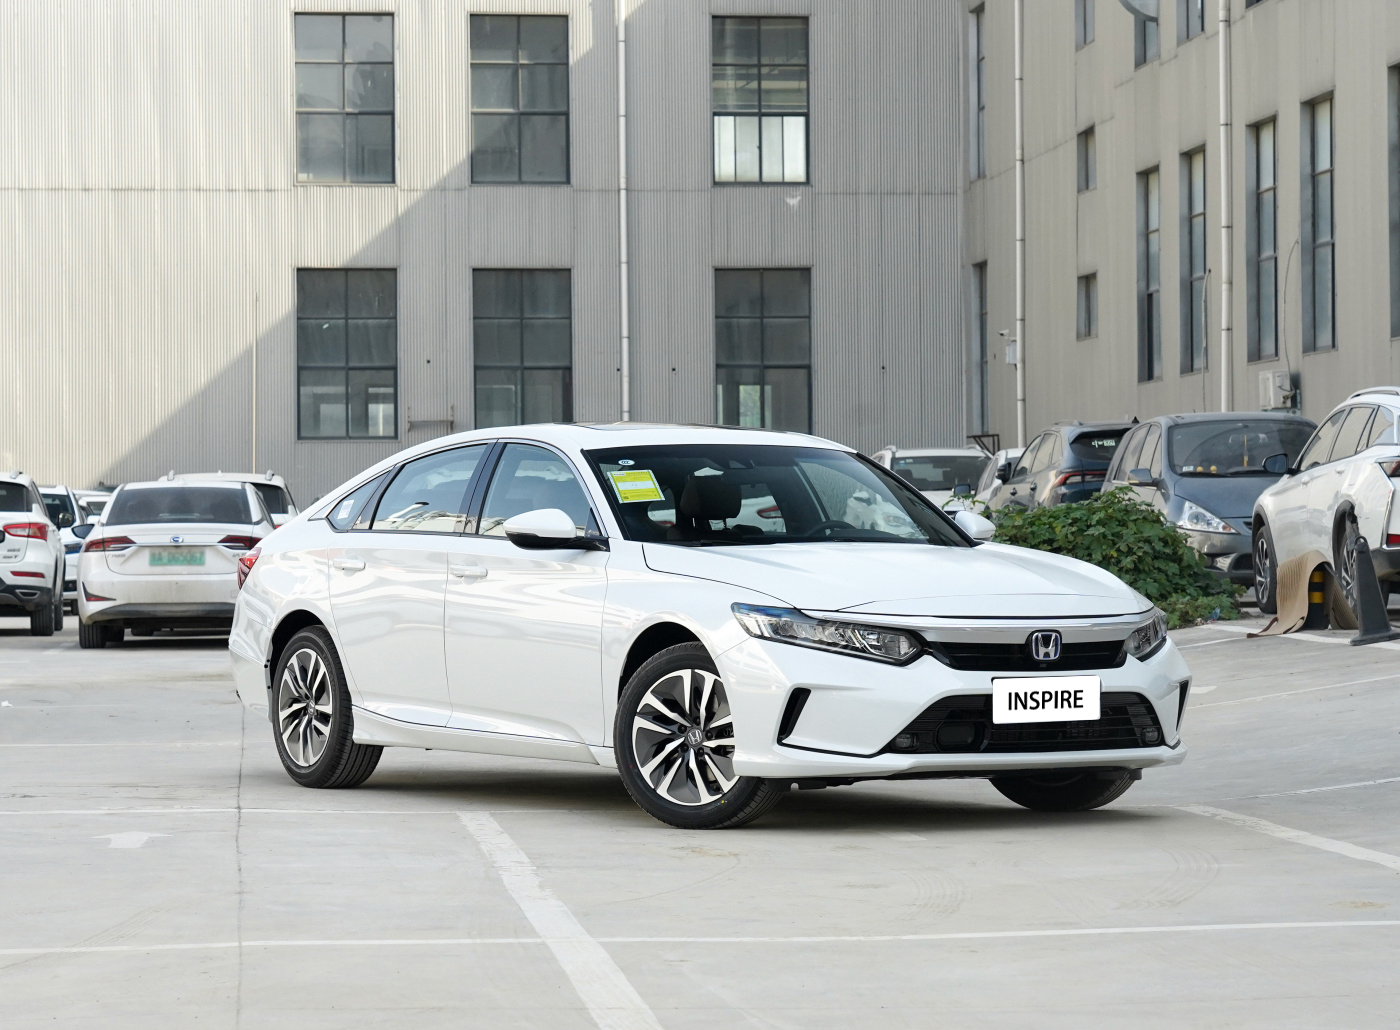 Dongfeng Honda Inspire 1.5T/2.0L CVT Hybrid mid-size sedan - Honda - 2